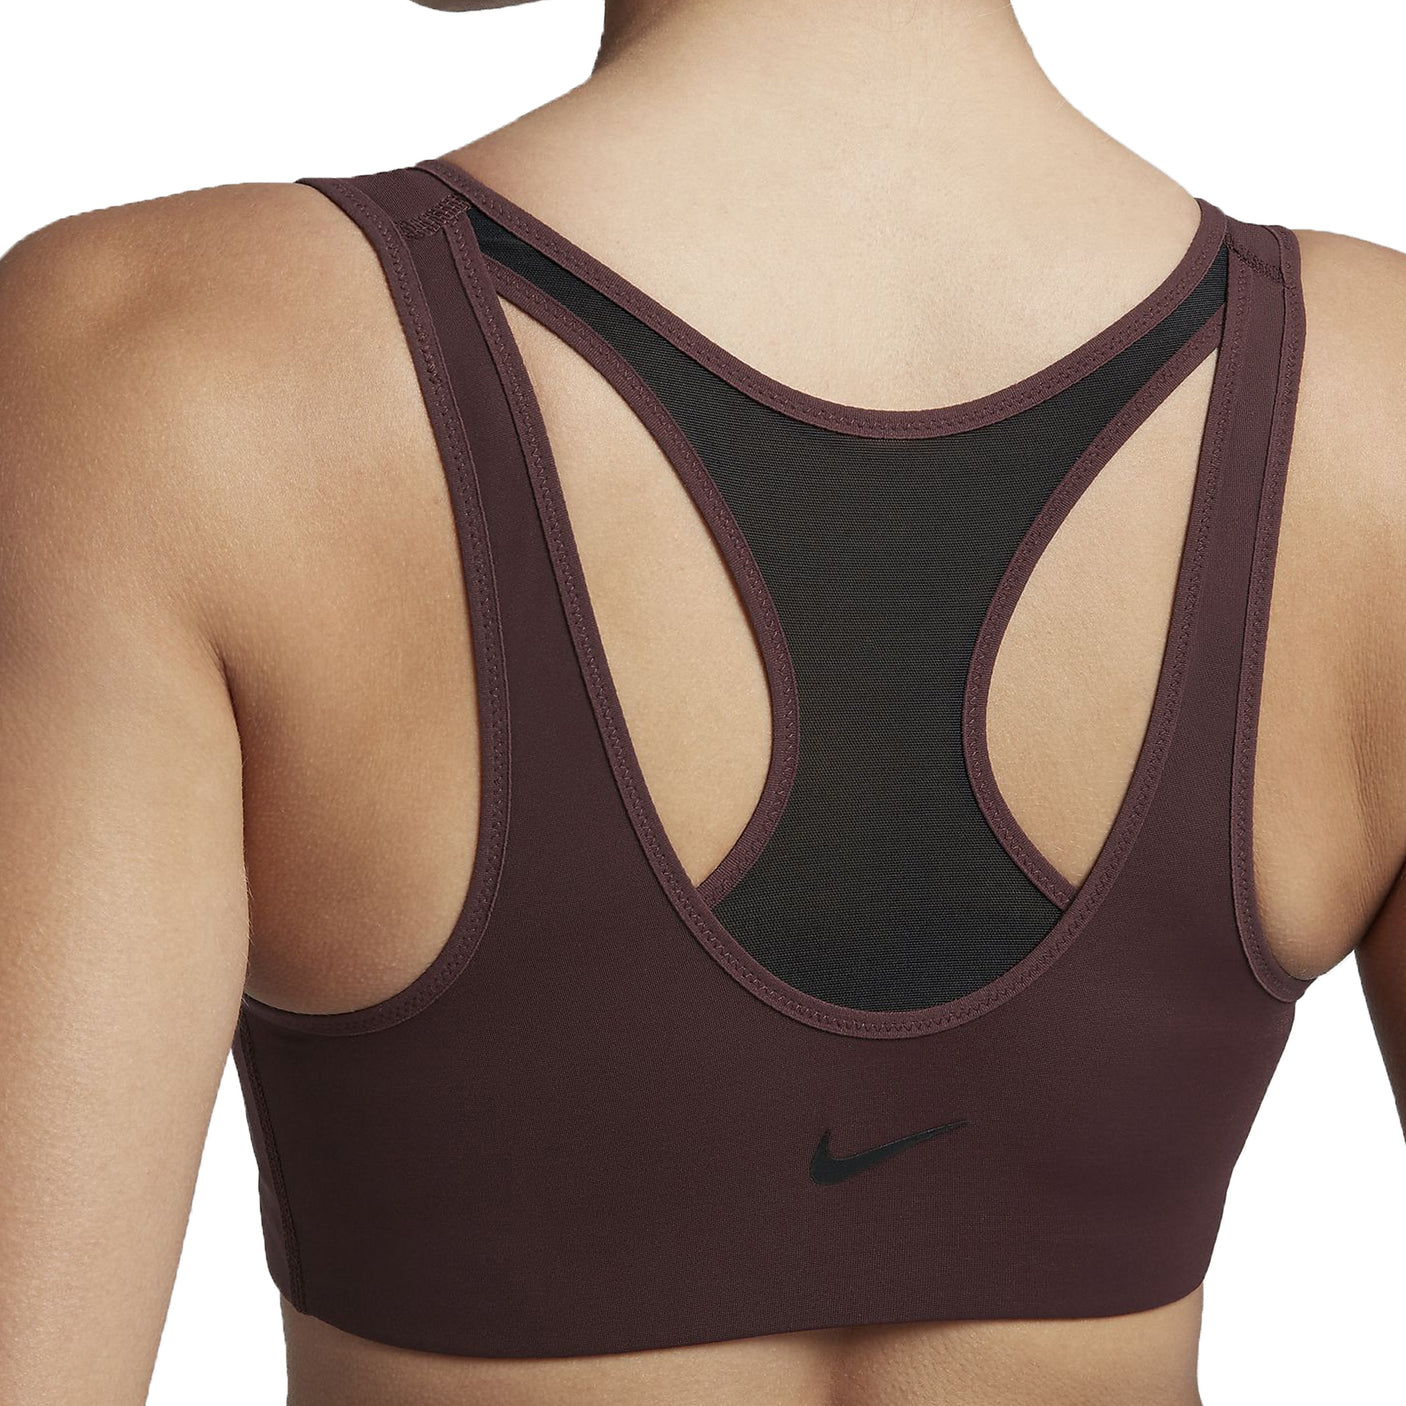 Nike Women's Shape Zip Sports Bra Burgundy Crush/Black - XS